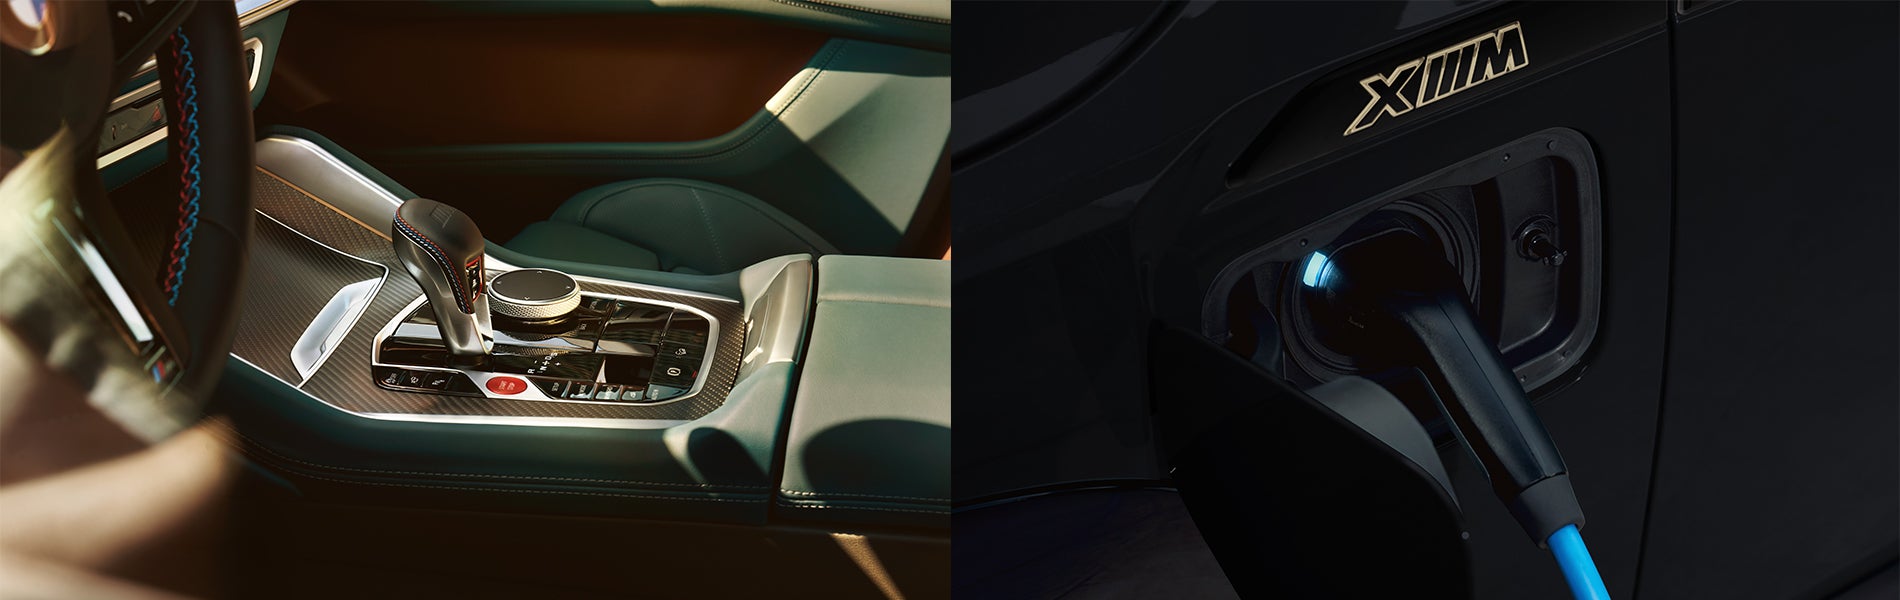 BMW XM Interior shot & Exterior Charging shot. BMW of Grand Blanc in Grand Blanc MI